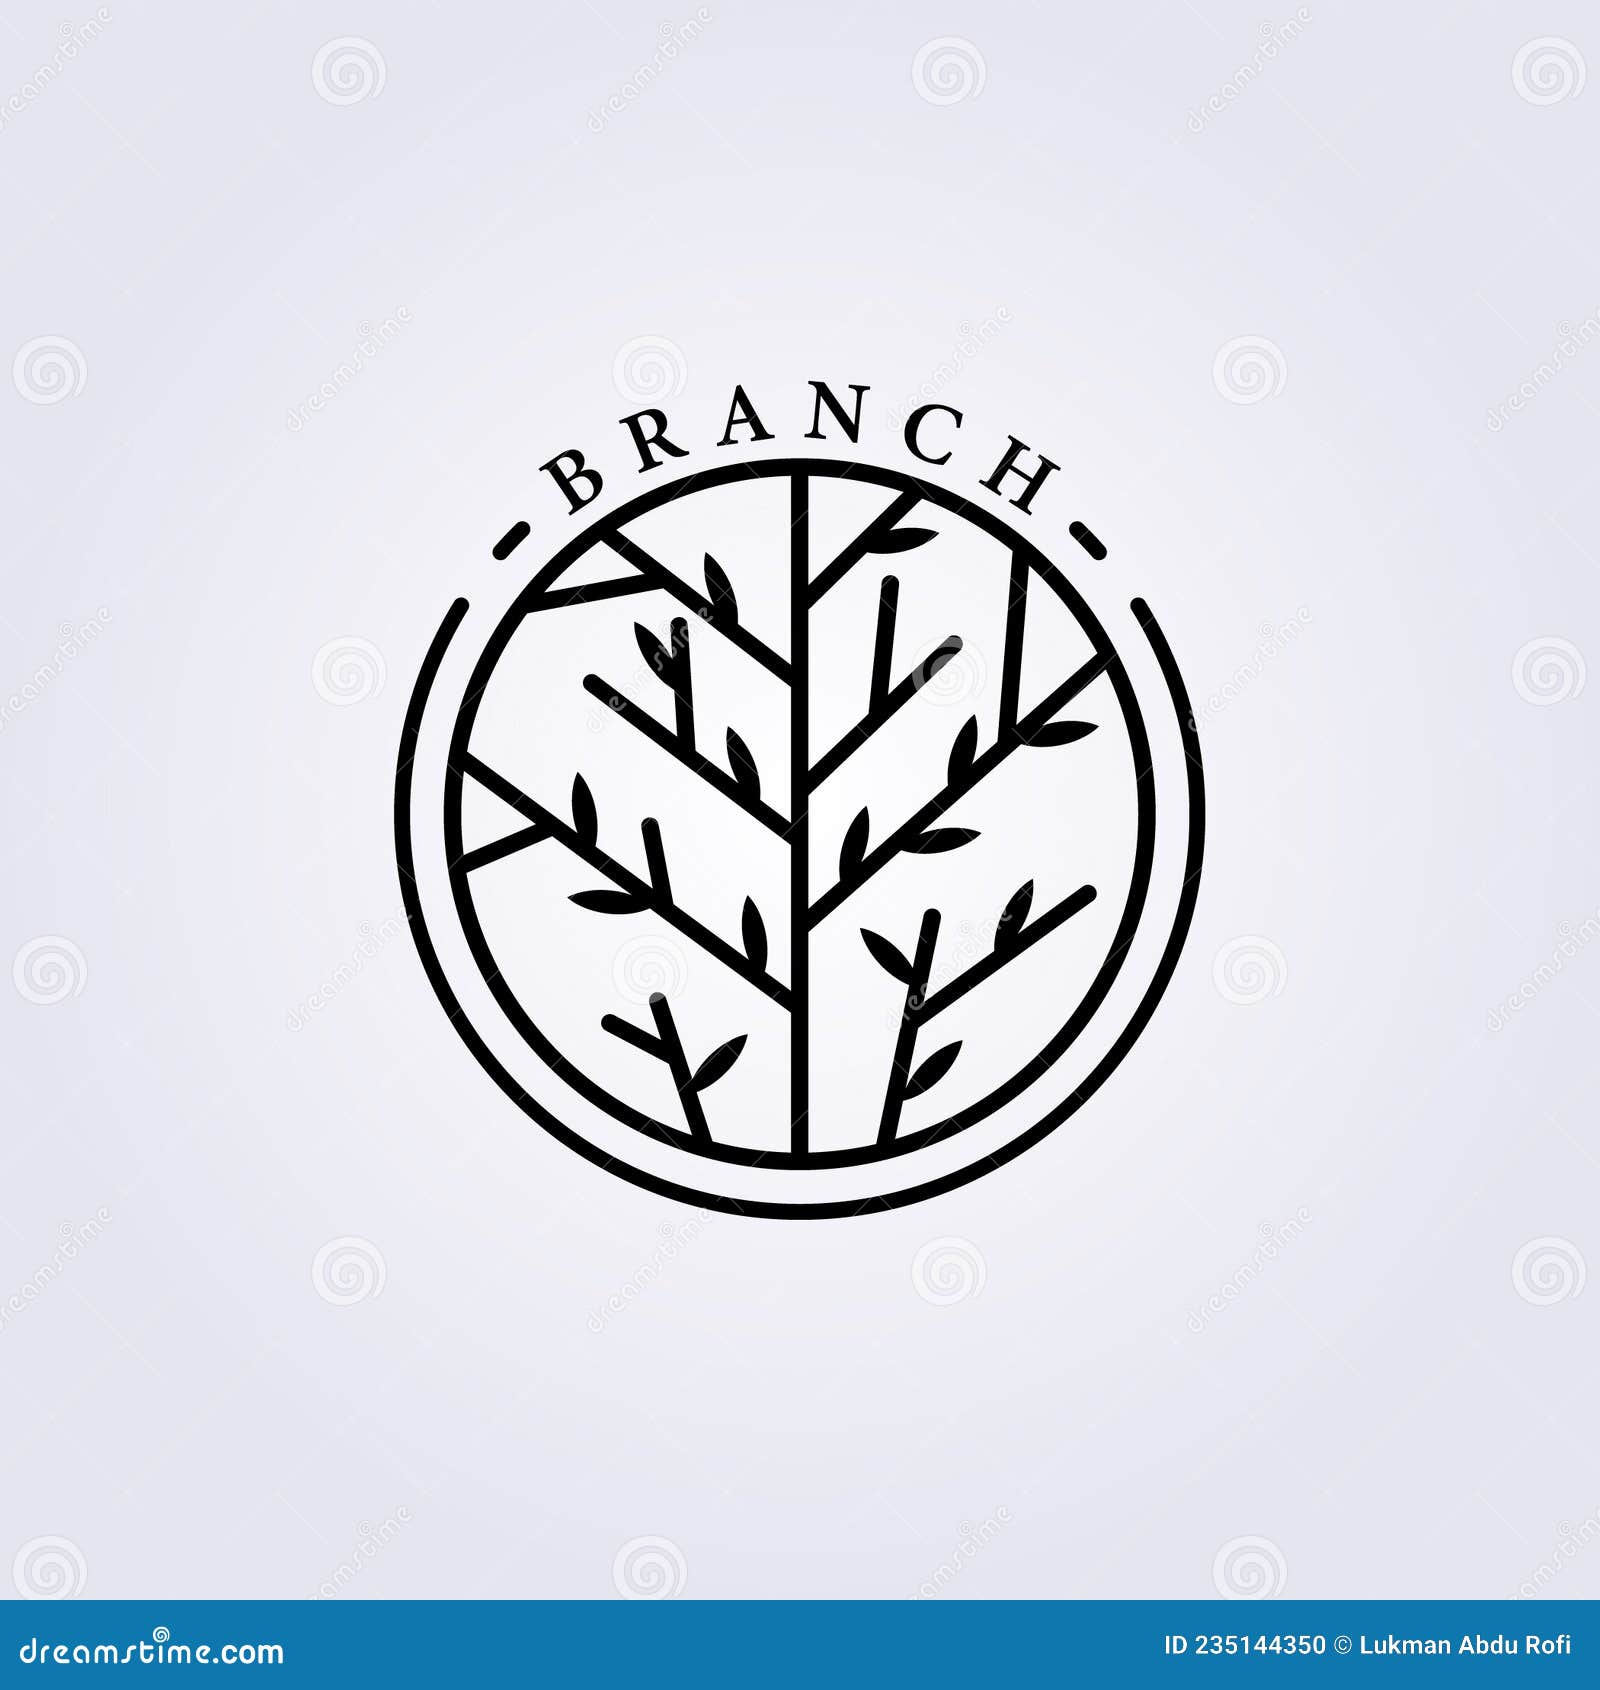 Premium Vector | Tree vector logo design a simple tree as a sign